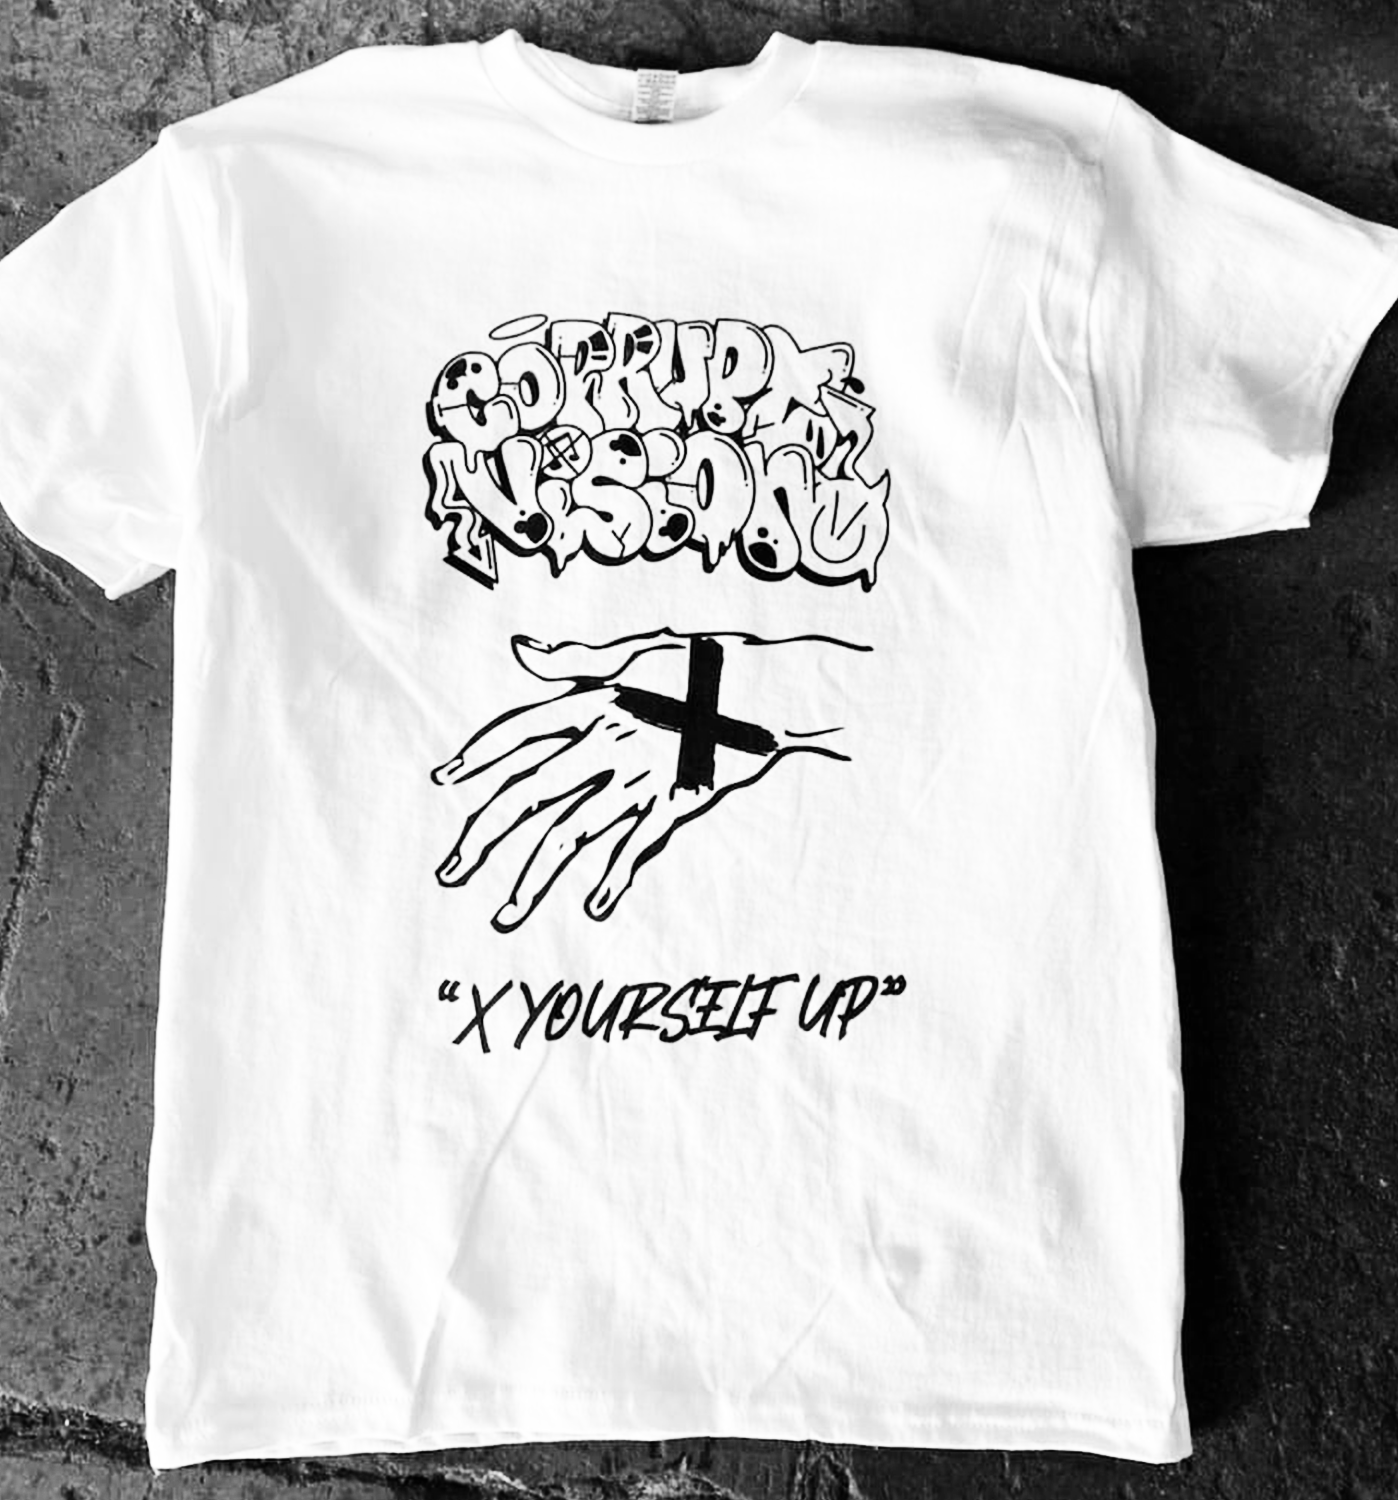 Corrupt Vision - "X YOURSELF UP" Shirt - MEDIUM - Click Image to Close